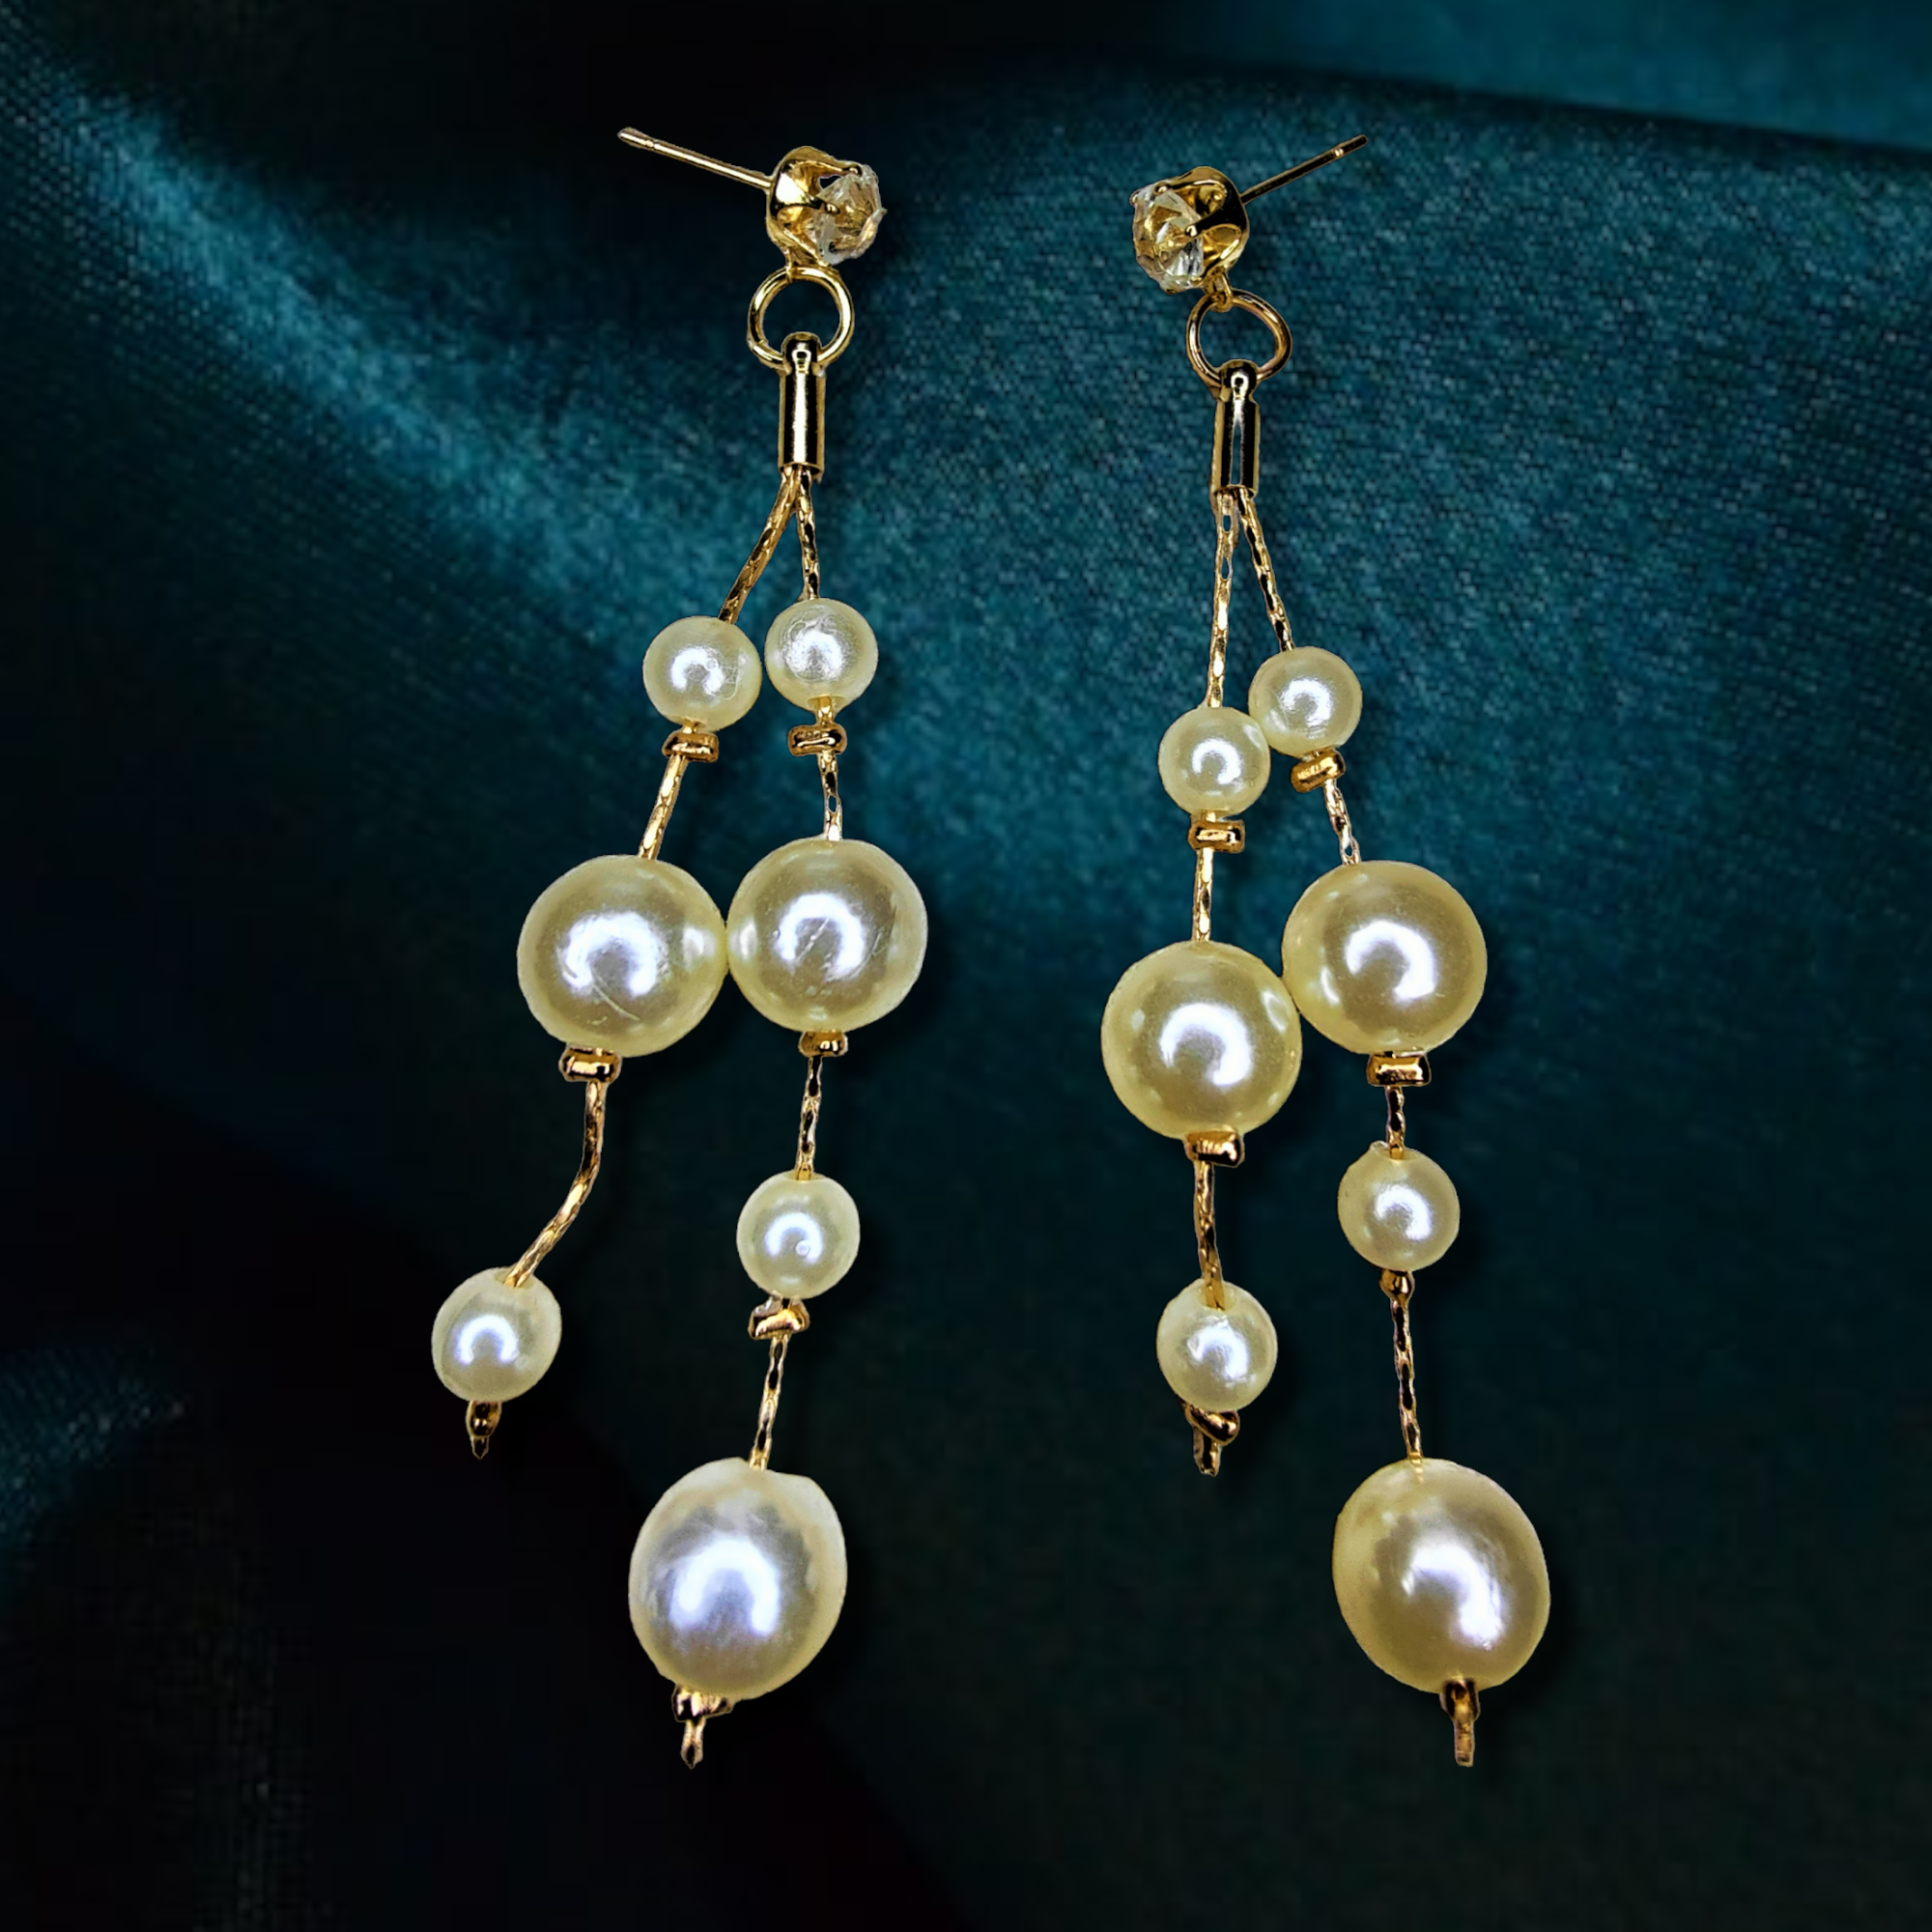 Pearl Bead and Chain Jewelry Ear Rings Earrings Agtukart